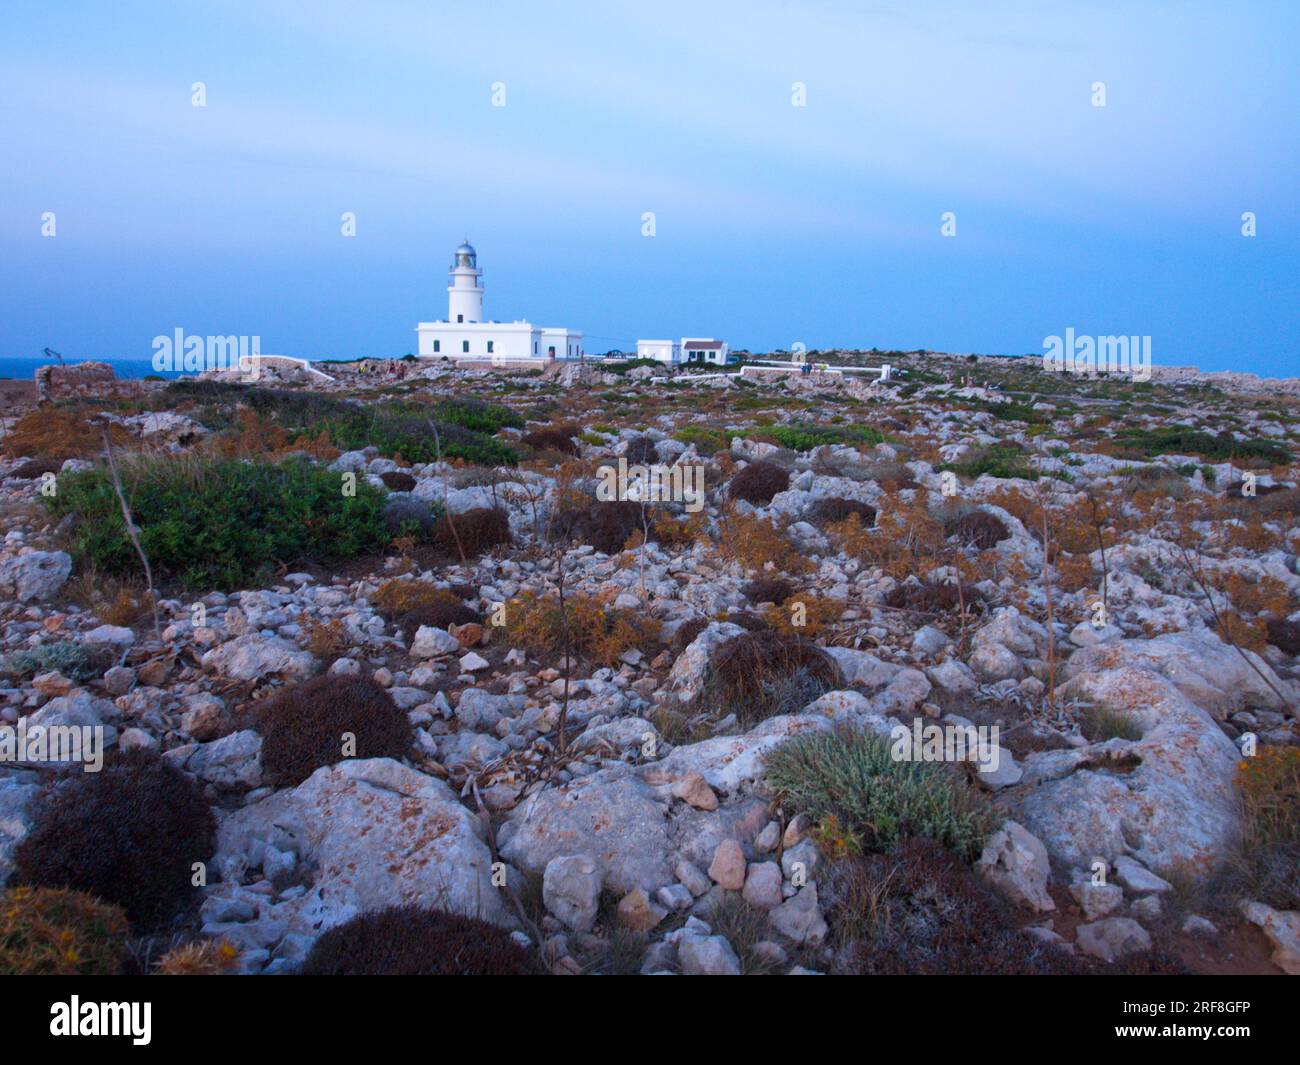 Un phare sur l'île de Minorque entouré d'un sol pierreux. Un faro de la Isla de Menorca rodeado de un terreno pedregoso. Banque D'Images